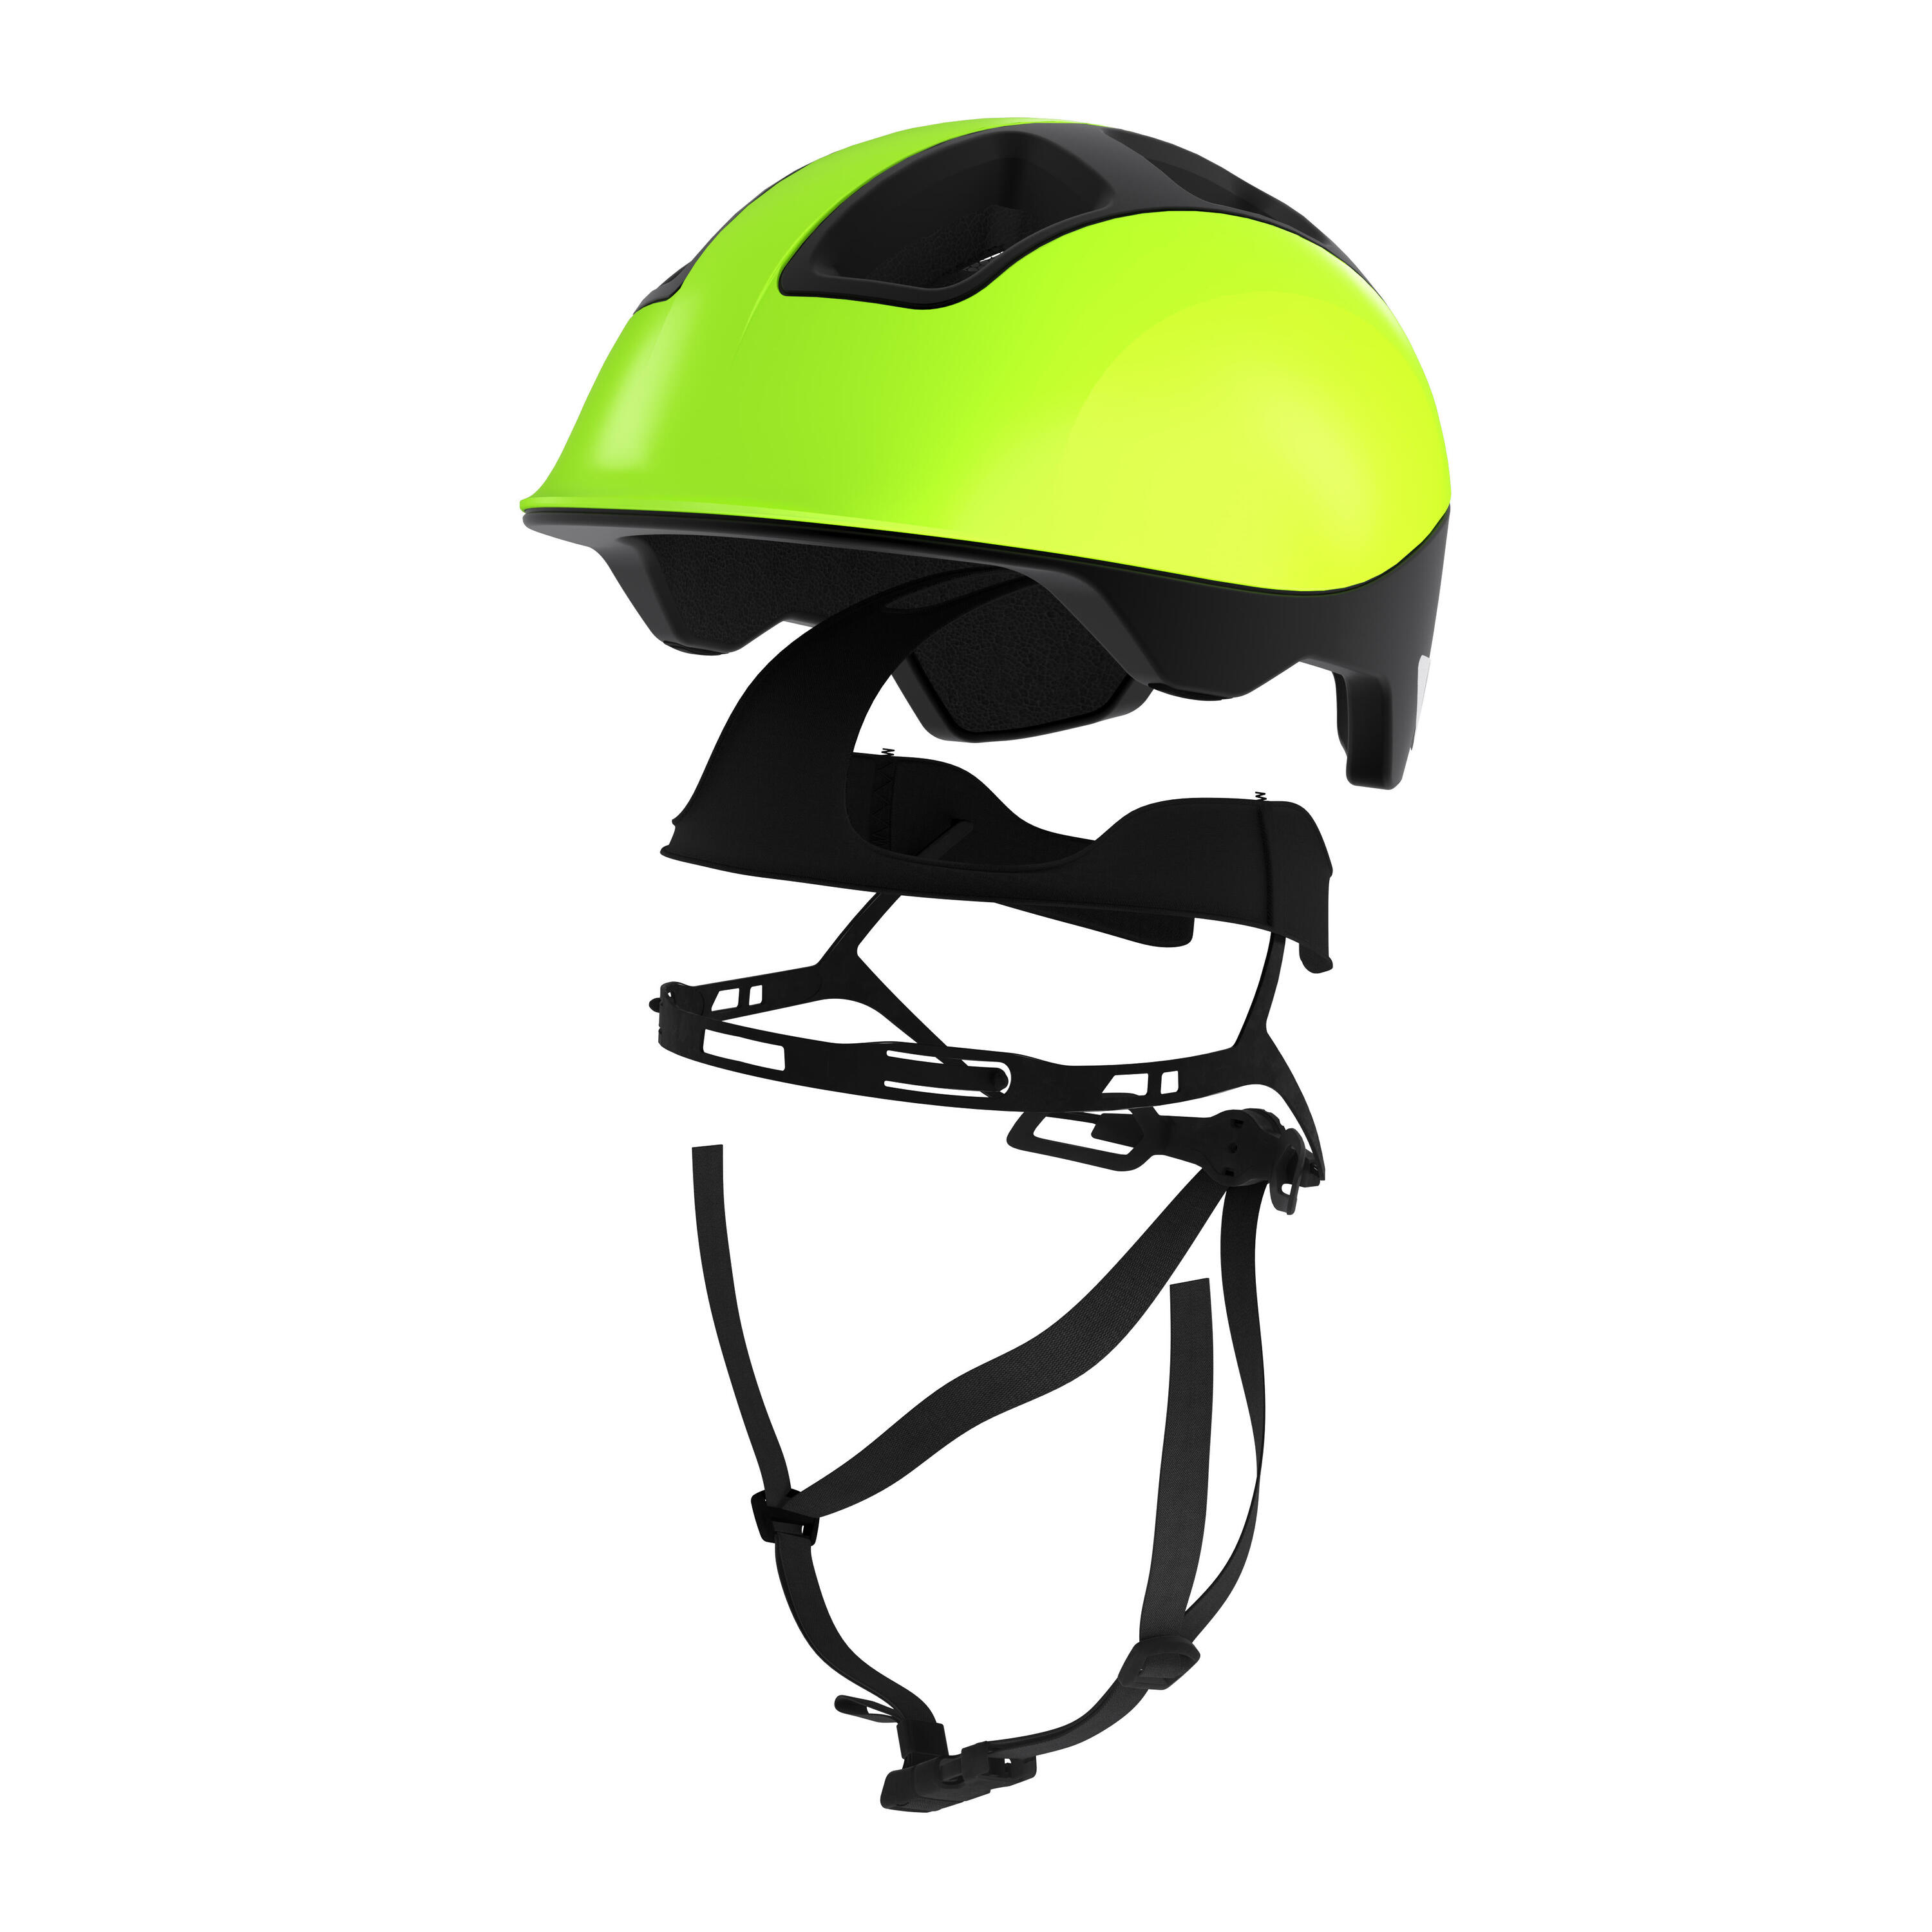 540 City Cycling Helmet Yellow 3/13